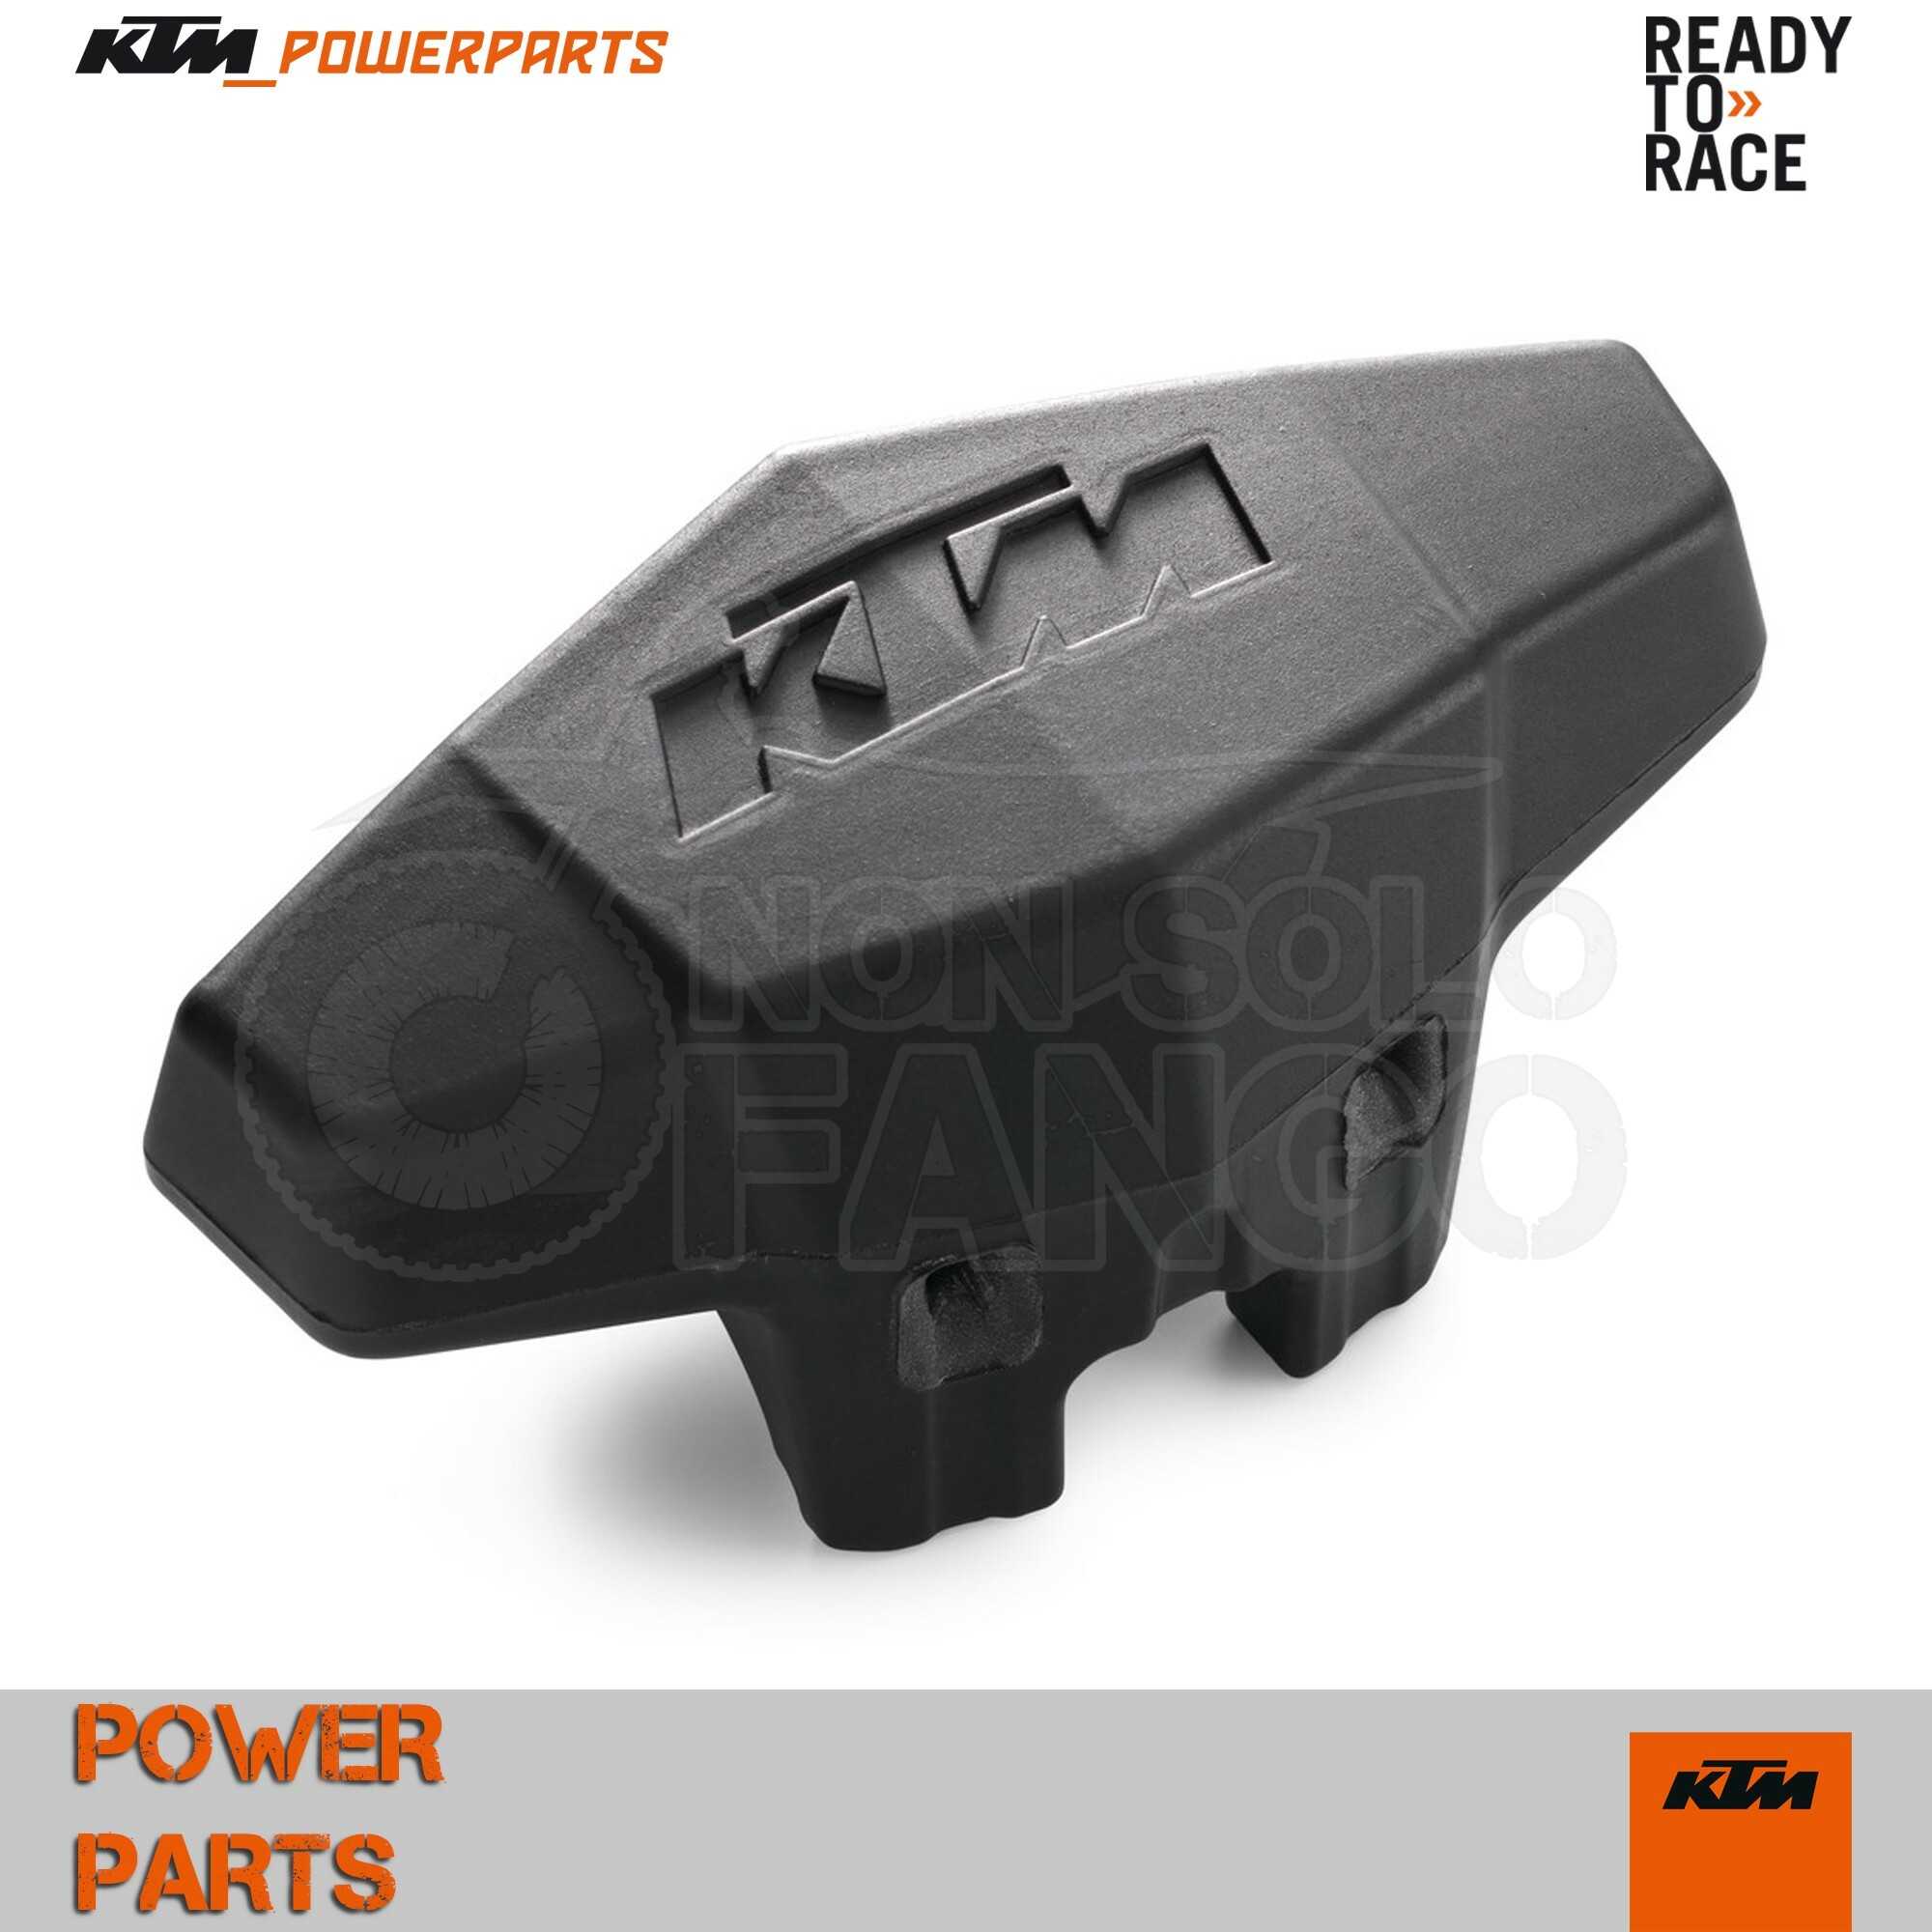 Paracolpi manubrio nero KTM Power Parts EXC SX